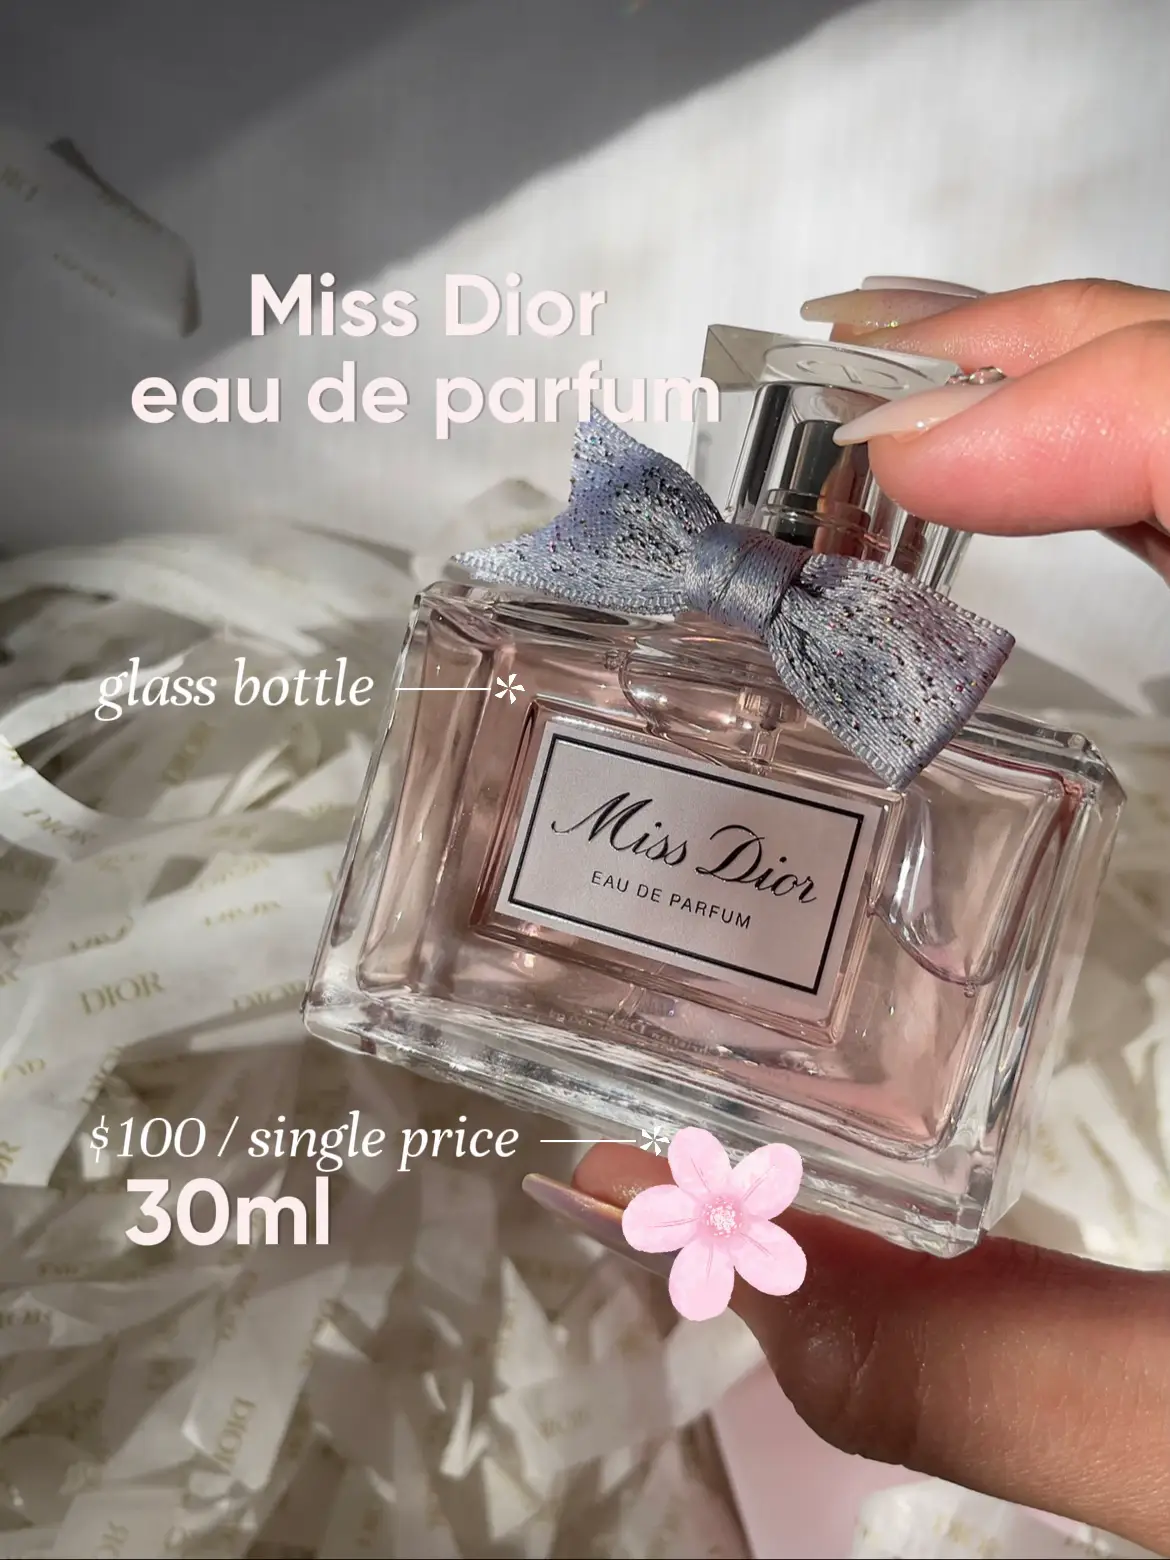 Give Personalizable Miss Dior Eau de Parfum - Holiday Gift Idea